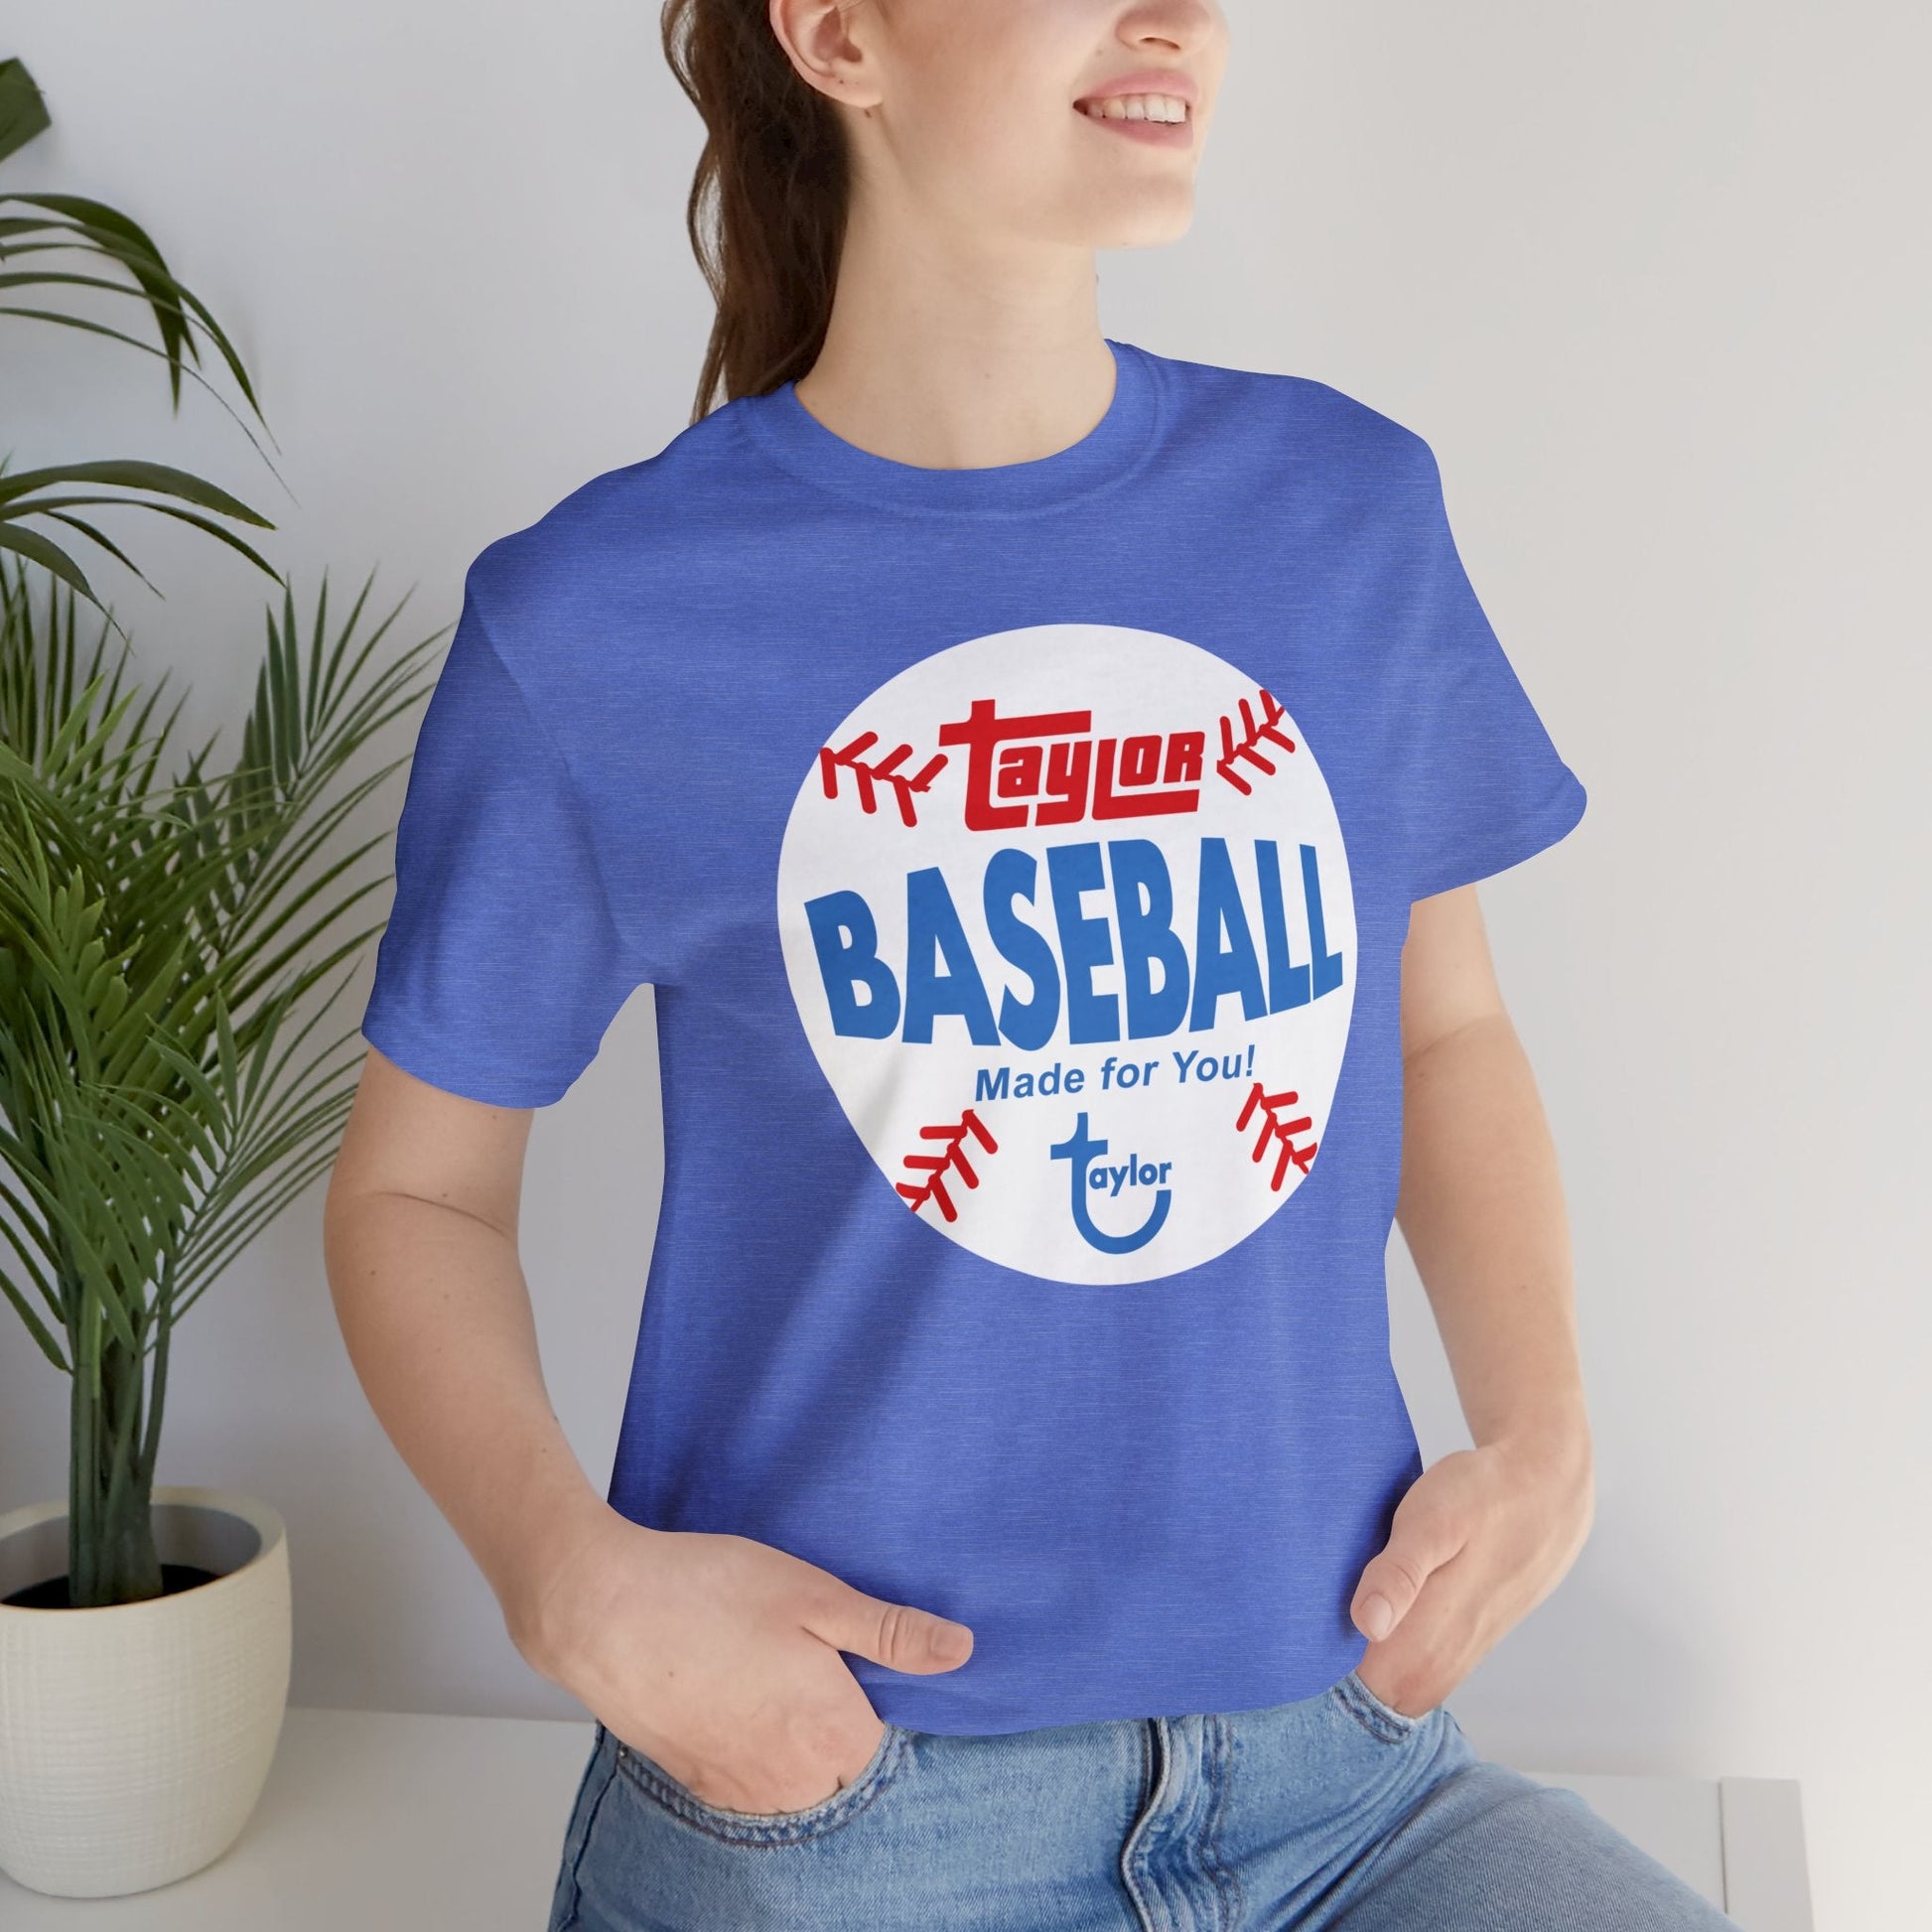 Taylor Made for You Baseball Soft Jersey T Shirt | Downriver Clothing Apparel | Detroit Michigan | Downriver World